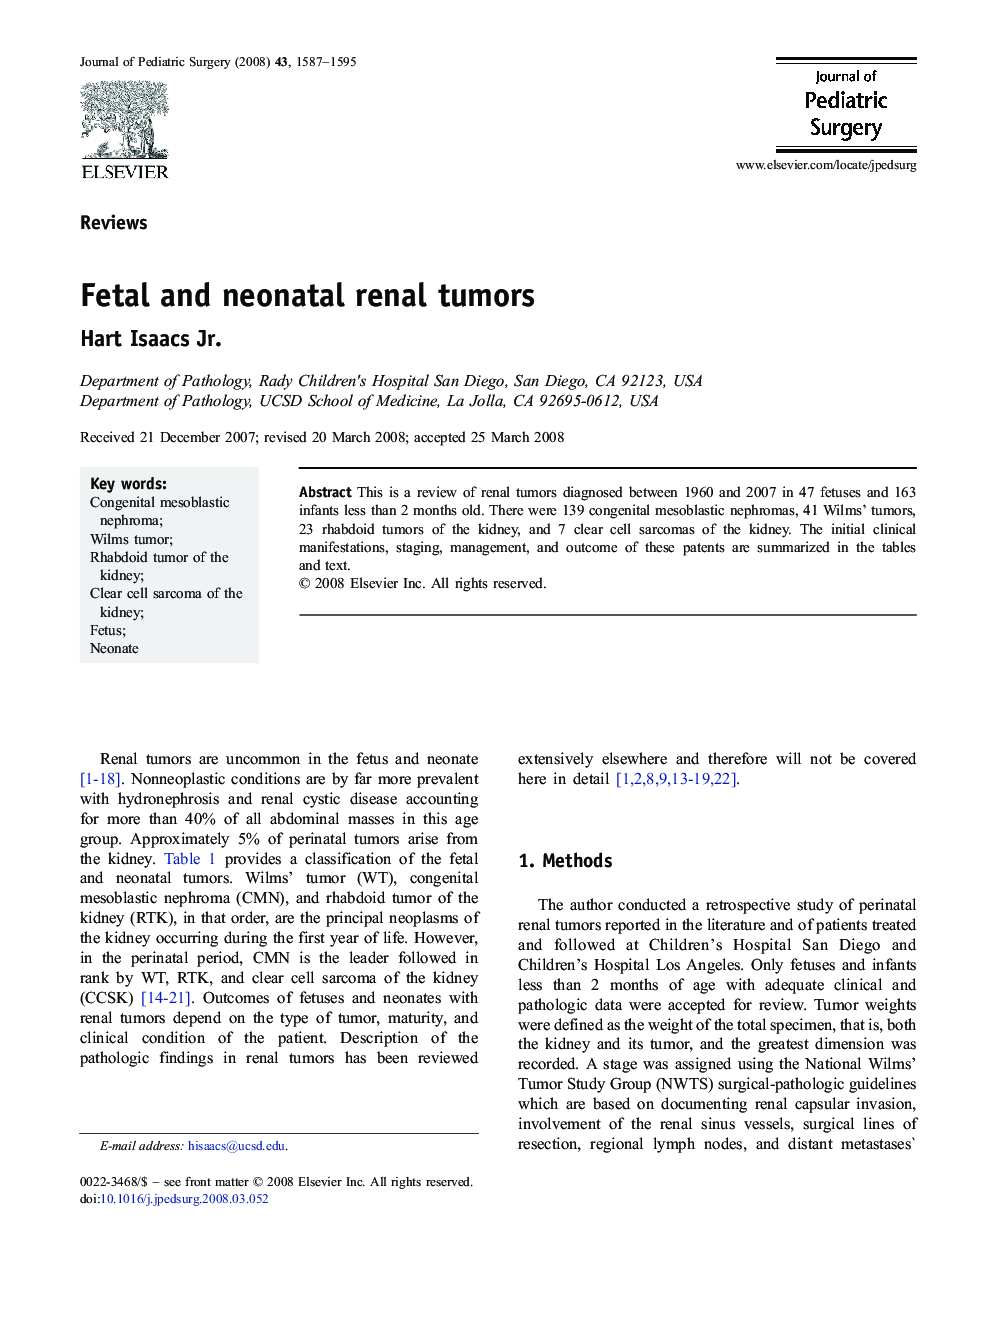 Fetal and neonatal renal tumors